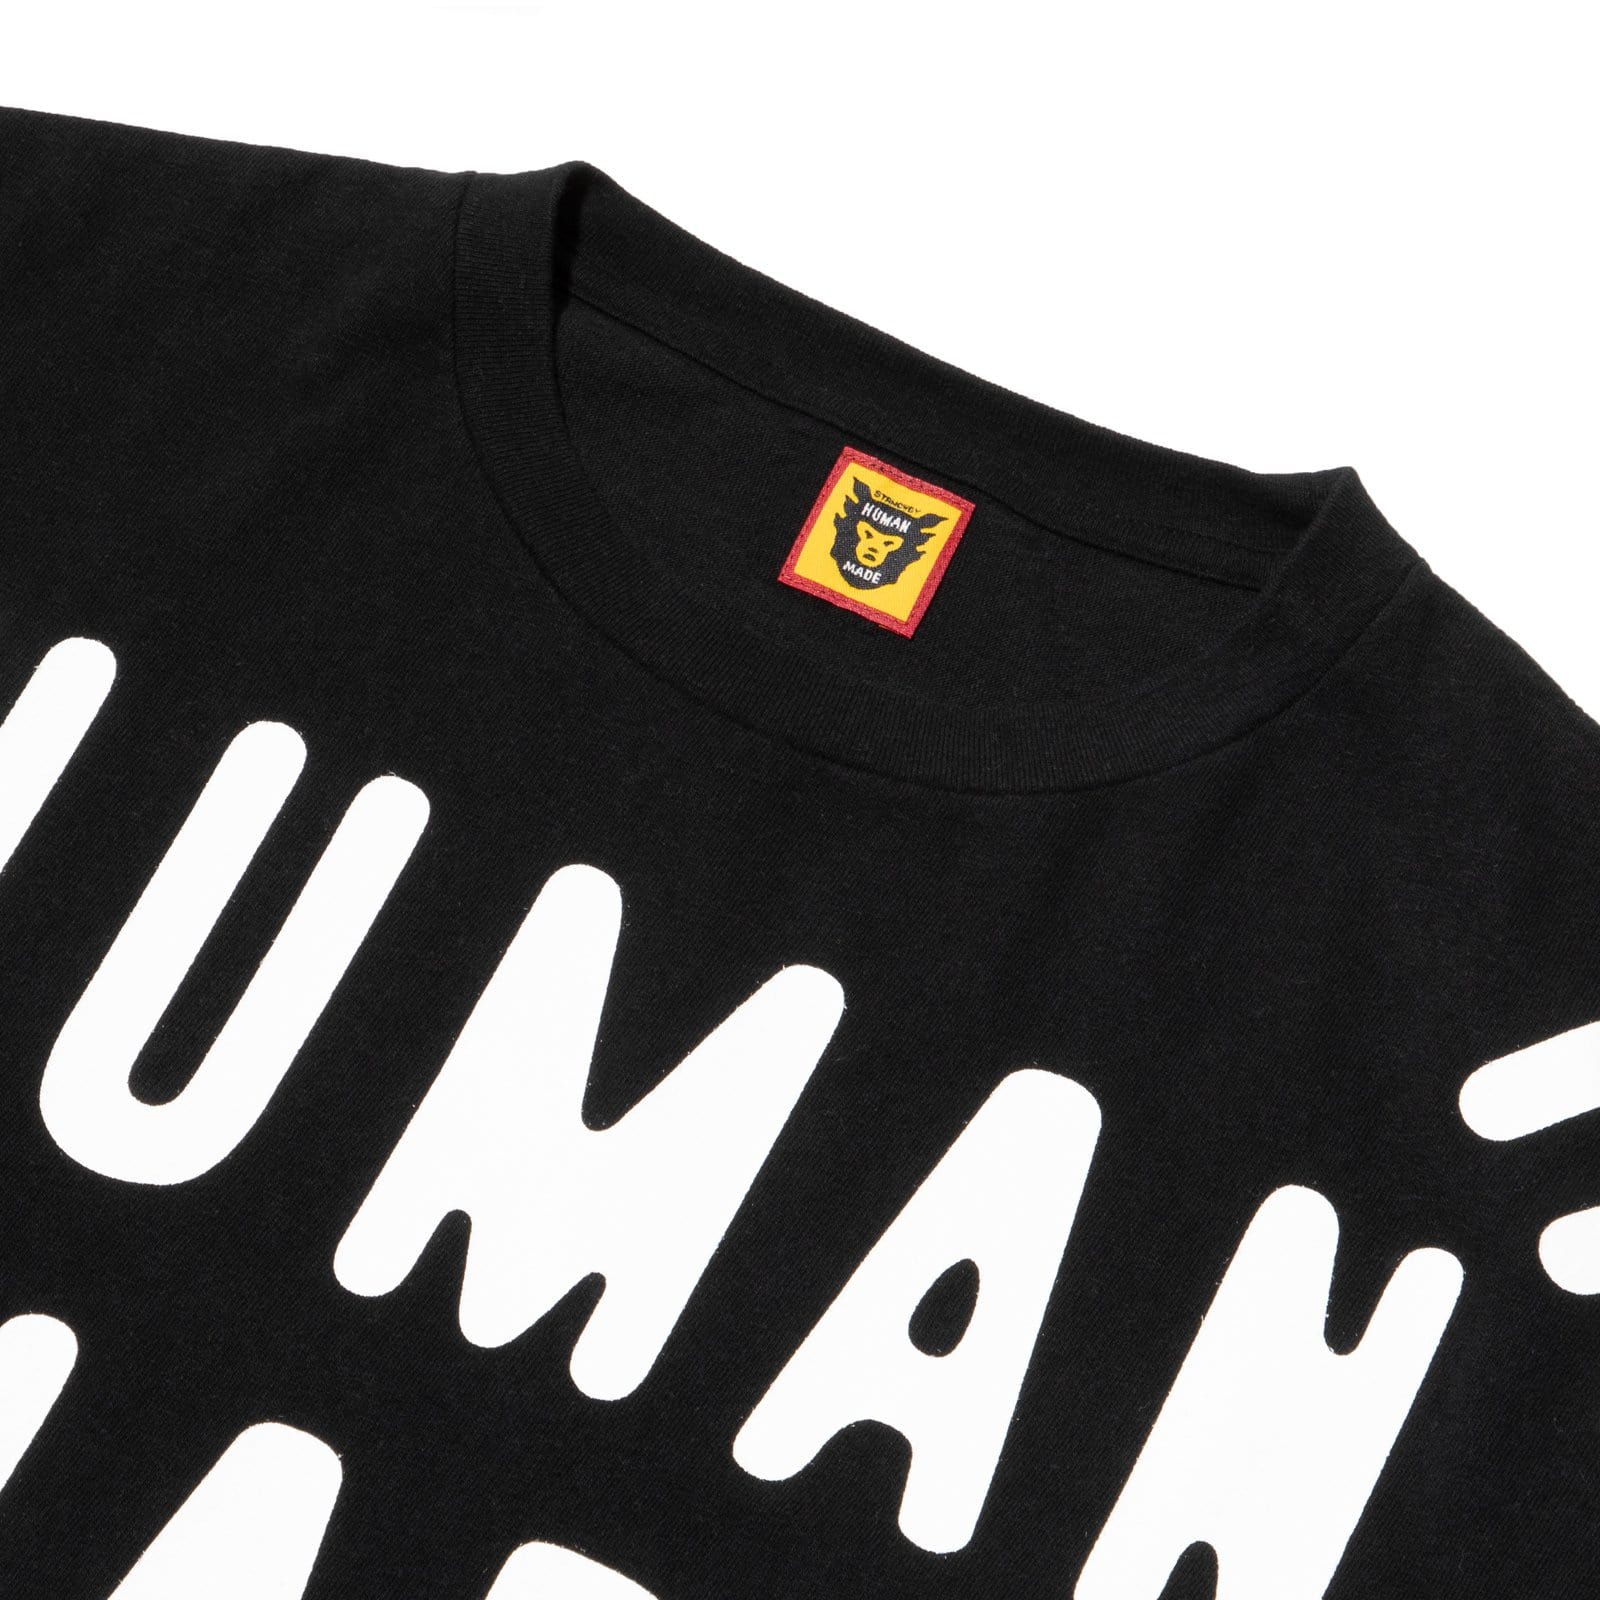 Human Made T-Shirts LONG-T #1